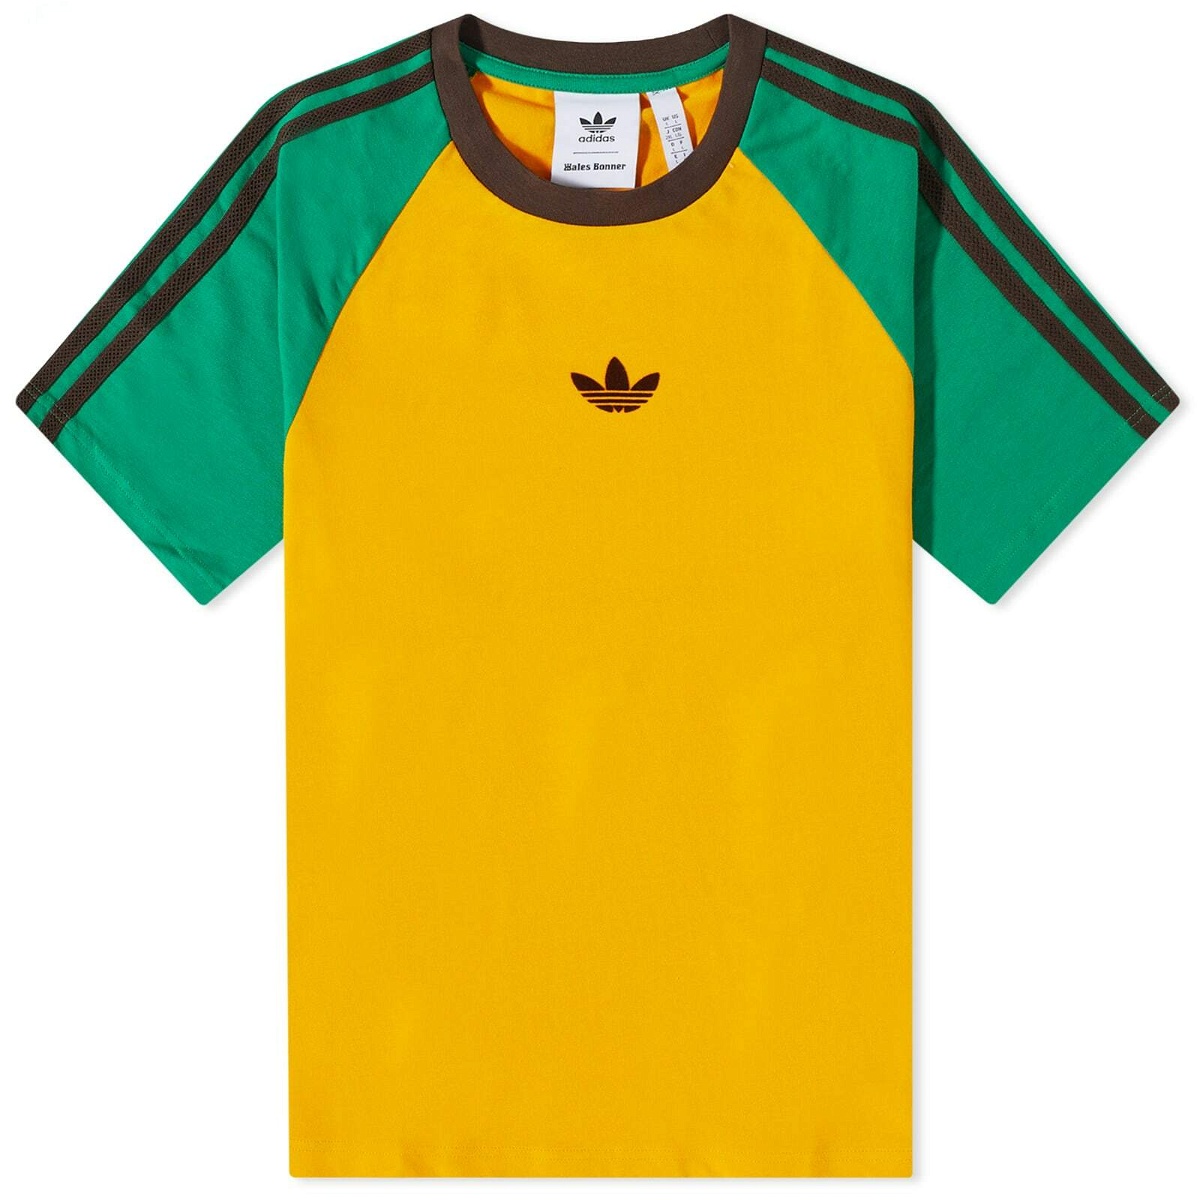 Photo: Adidas Consortium x Wales Bonner T-Shirt in Collegiate Gold